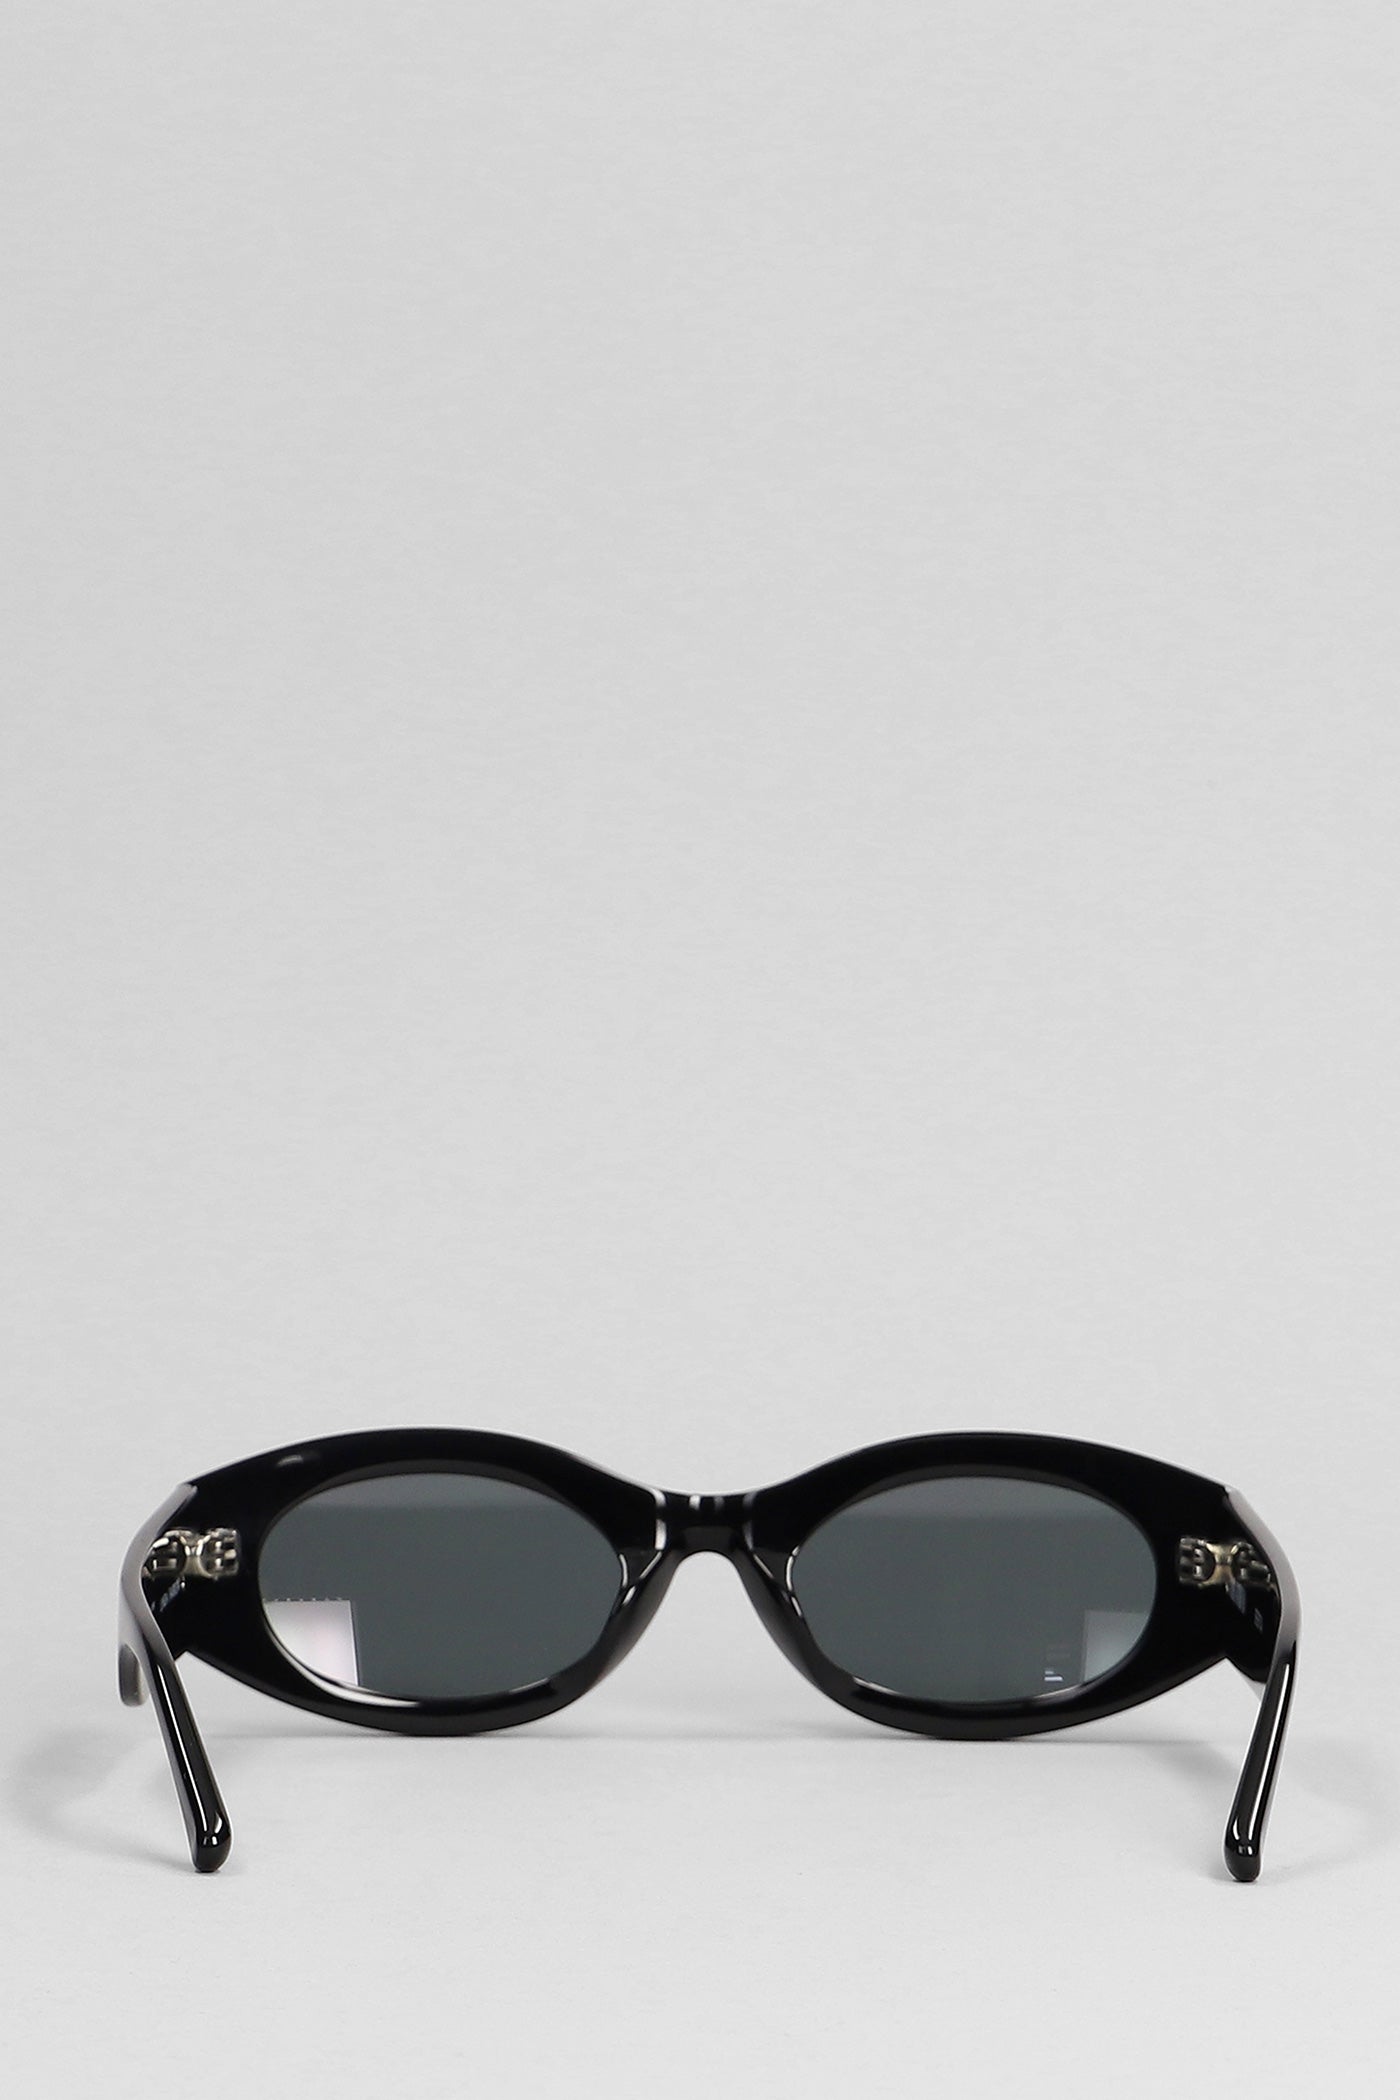 Sunglasses in black acrylic